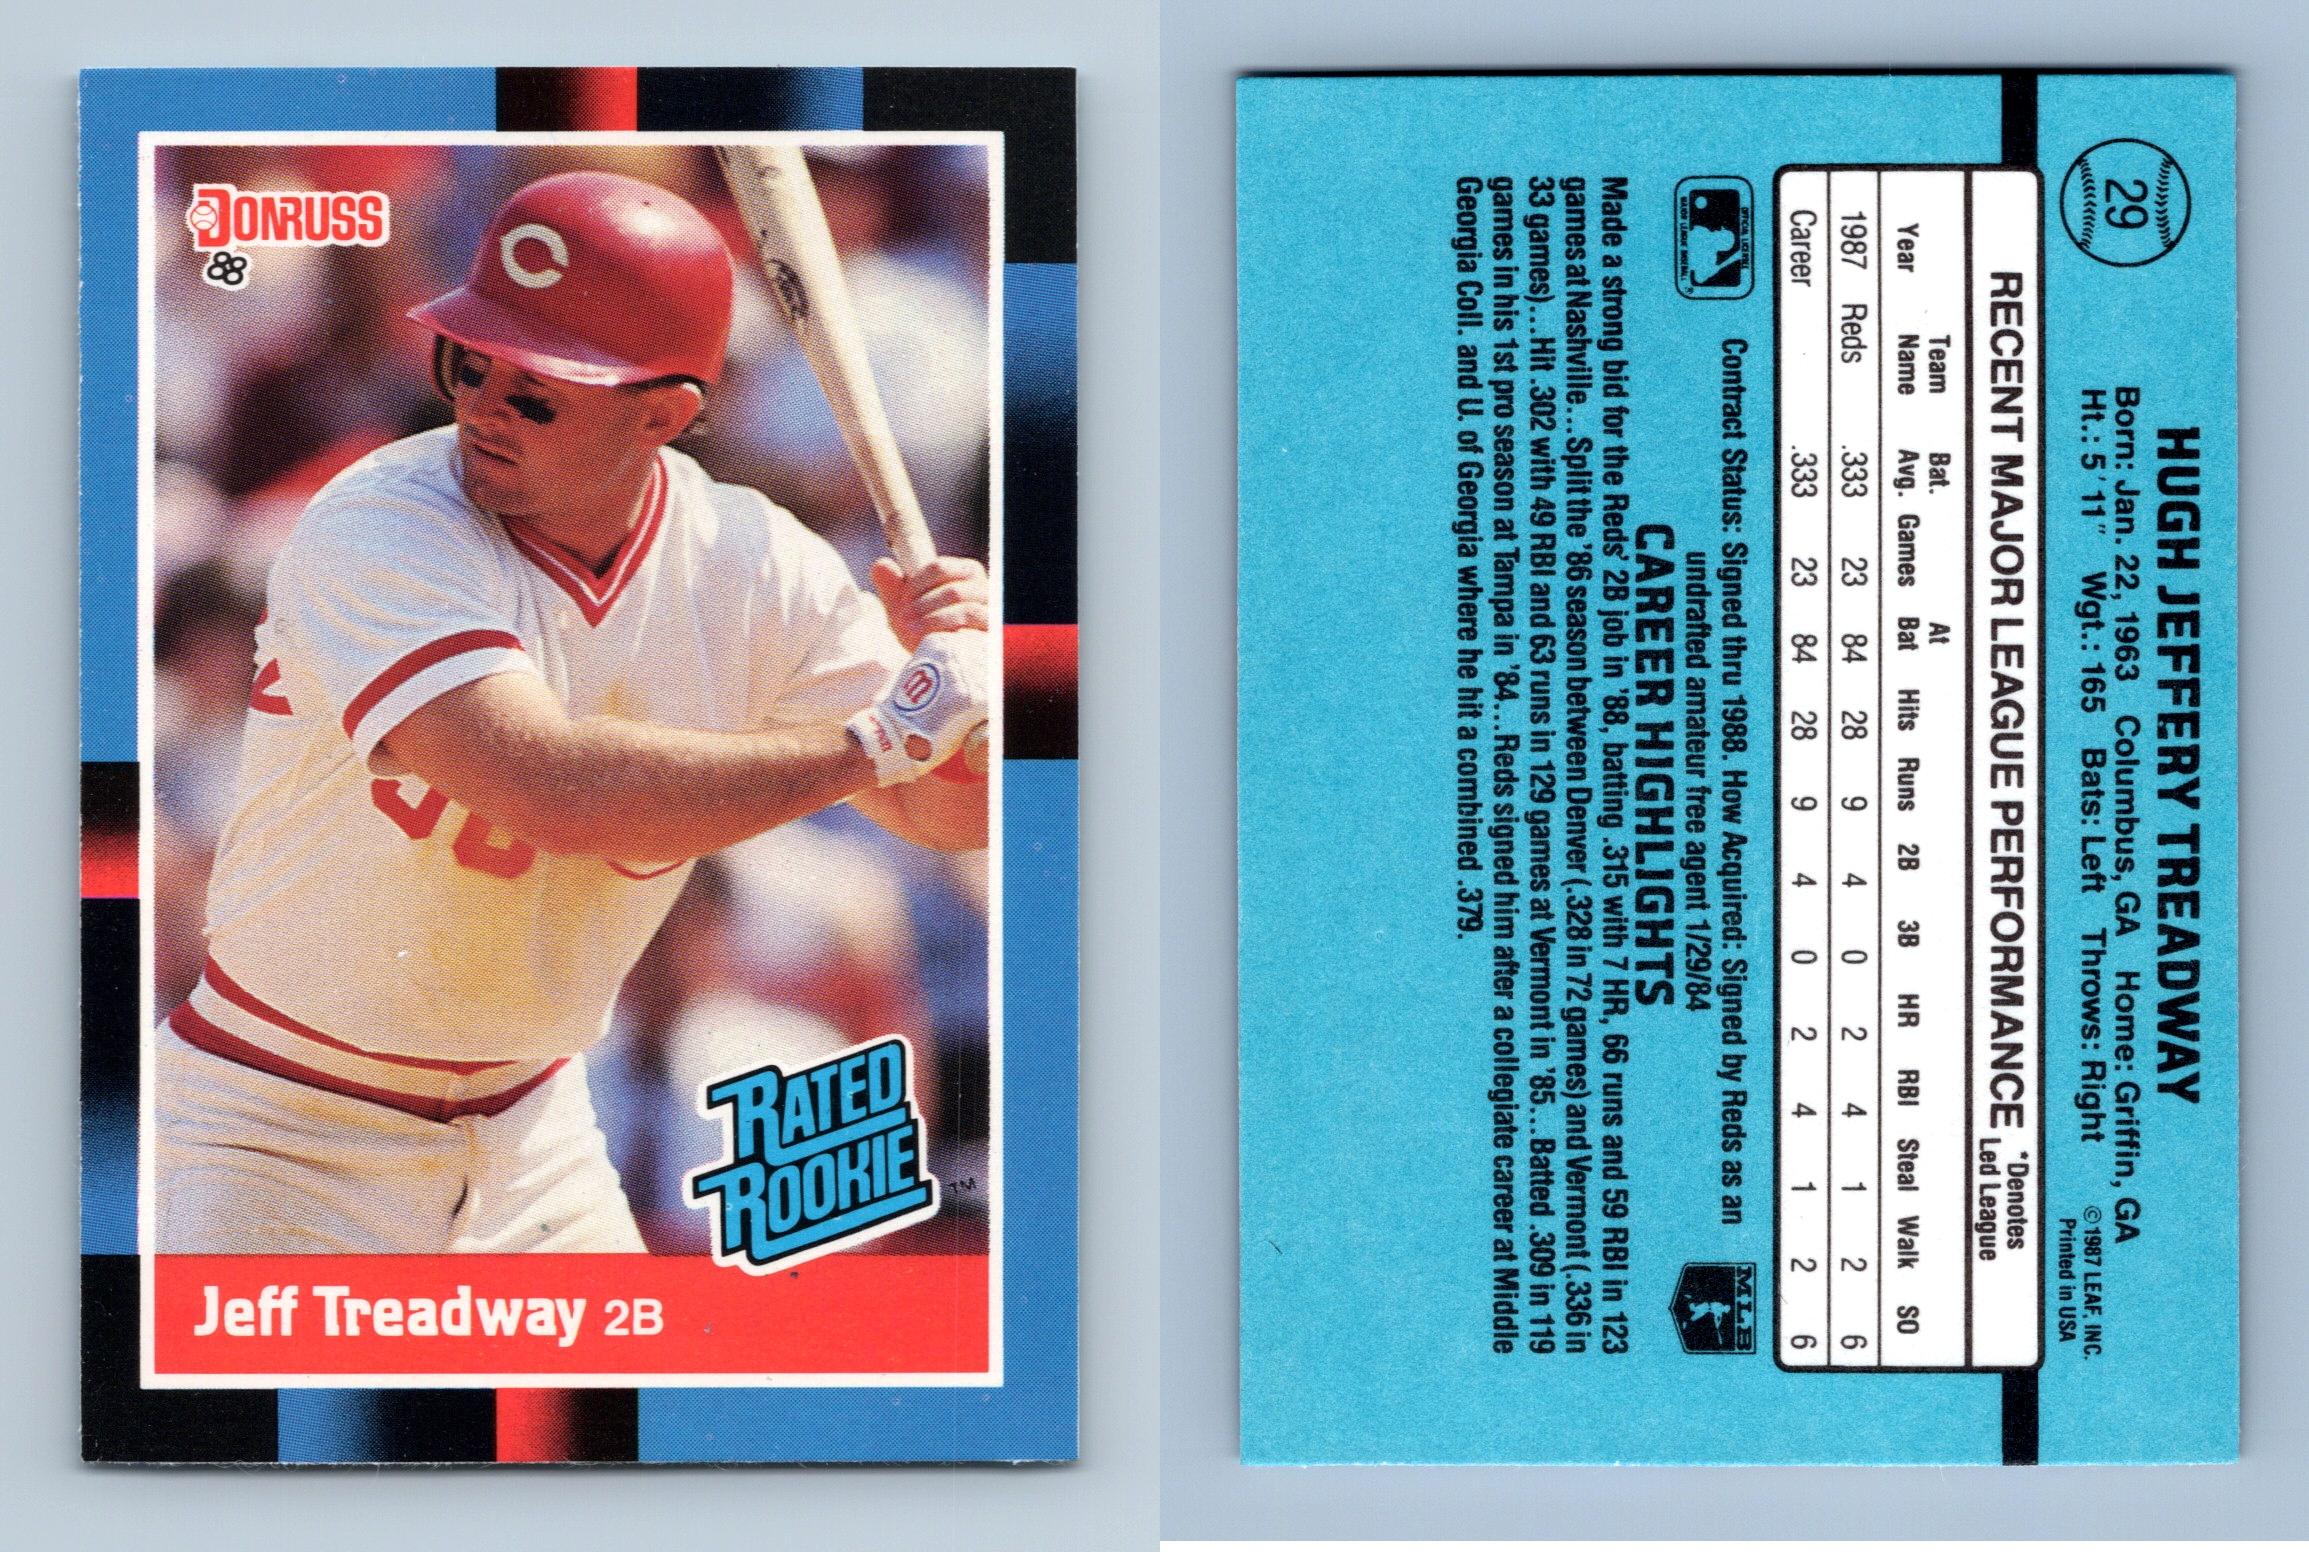 Ed Lynch - Chicago Cubs (MLB Baseball Card) 1992 Donruss # 77 Mint